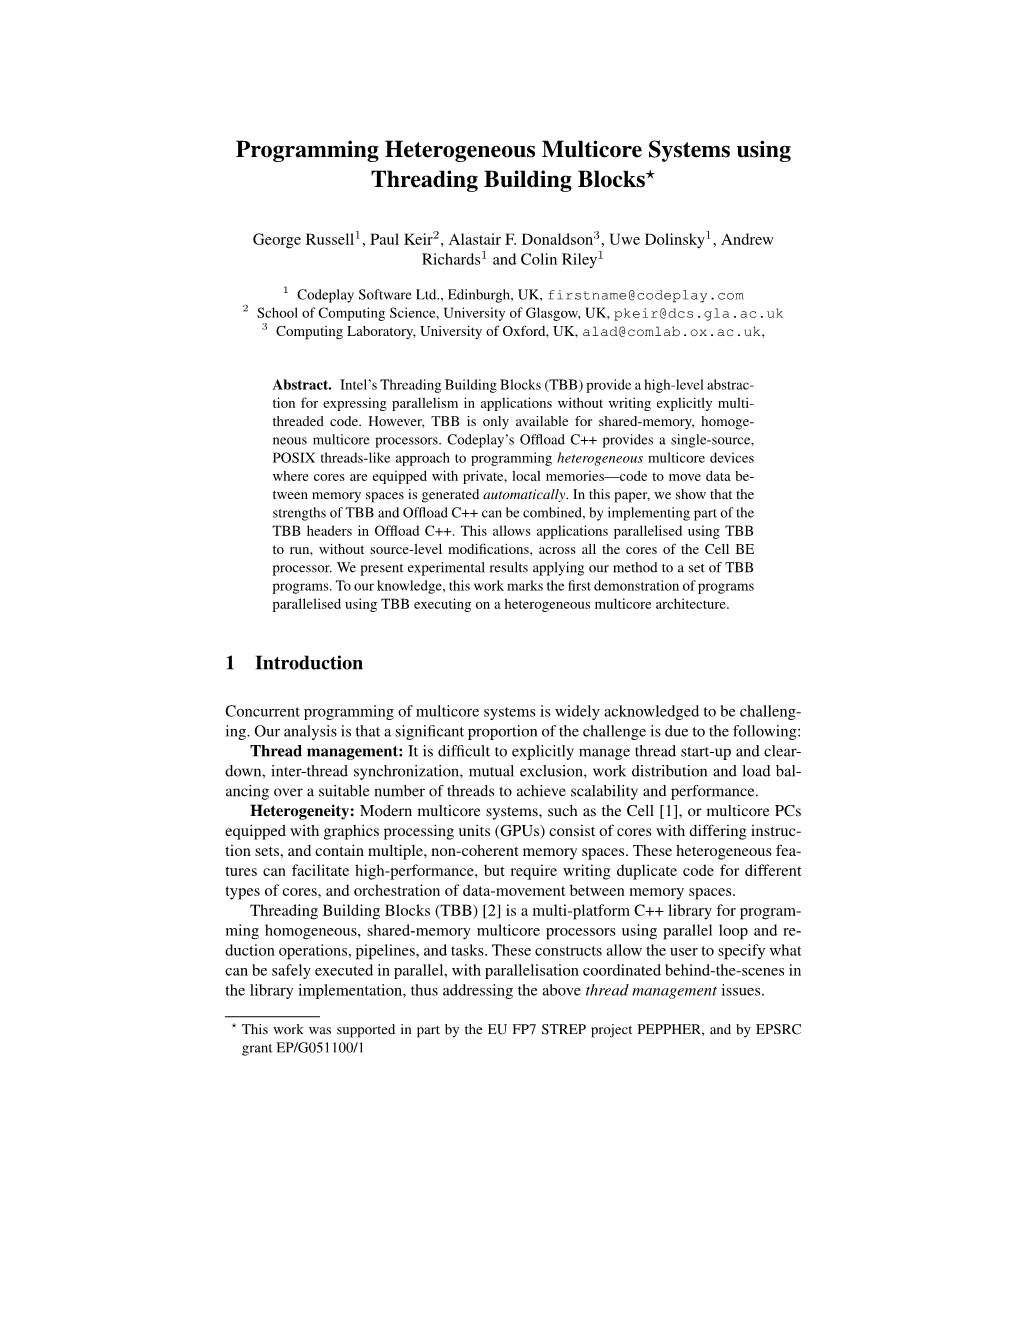 Programming Heterogeneous Multicore Systems Using Threading Building Blocks*